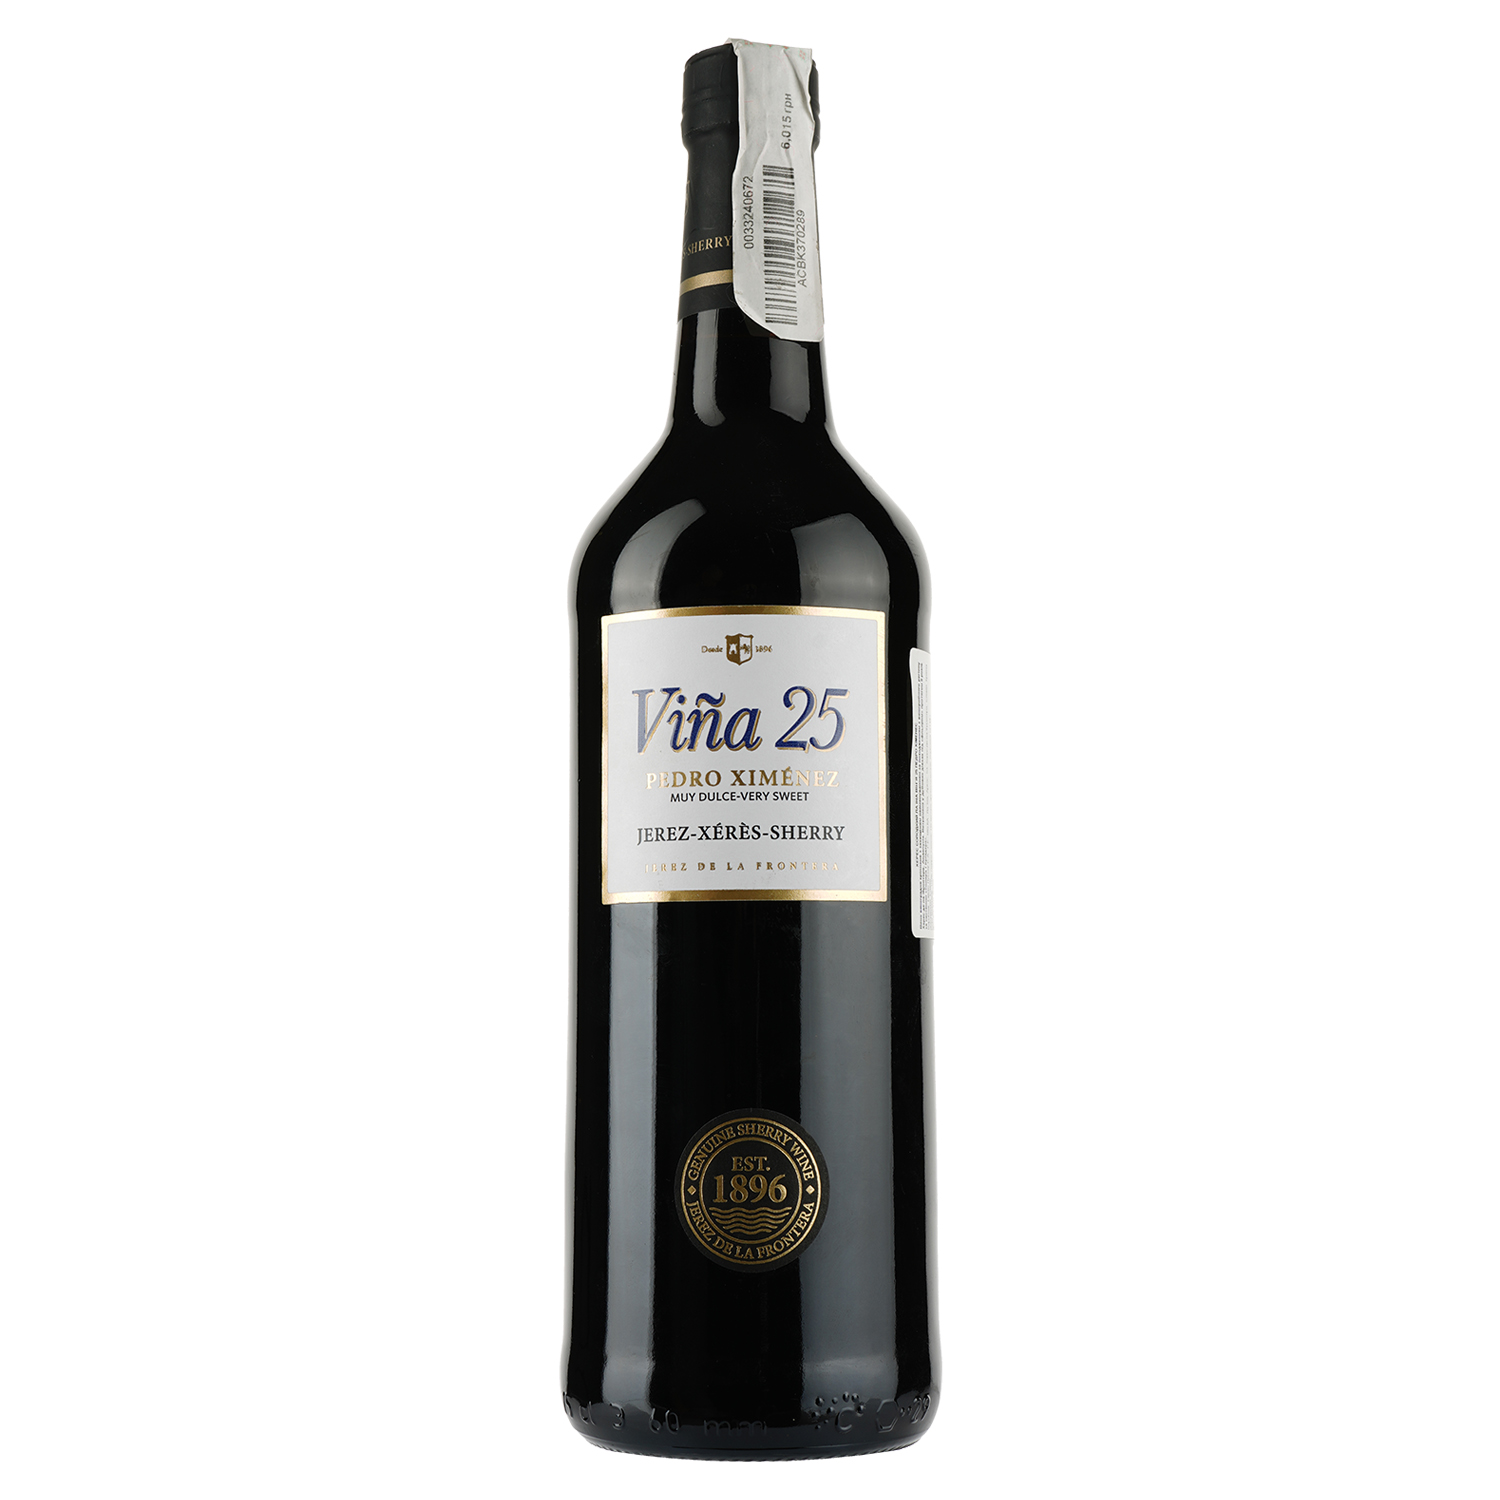 Вино La Ina херес Pedro Ximenez Sherry Vina 25, червоне, солодке, 17%, 0,75 л - фото 1